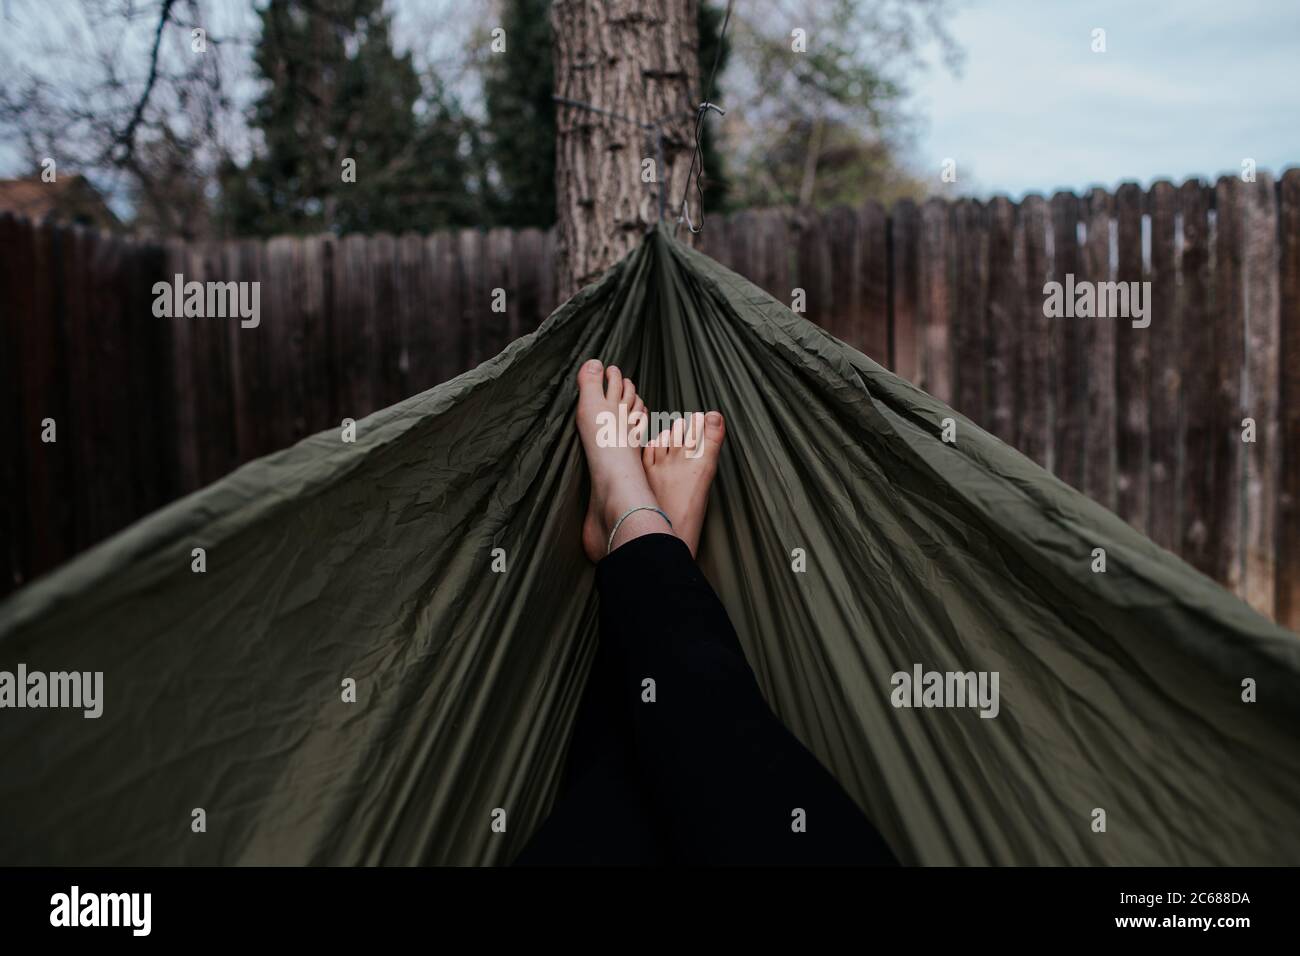 center shot of teen girl's feet in hammock Stock Photo